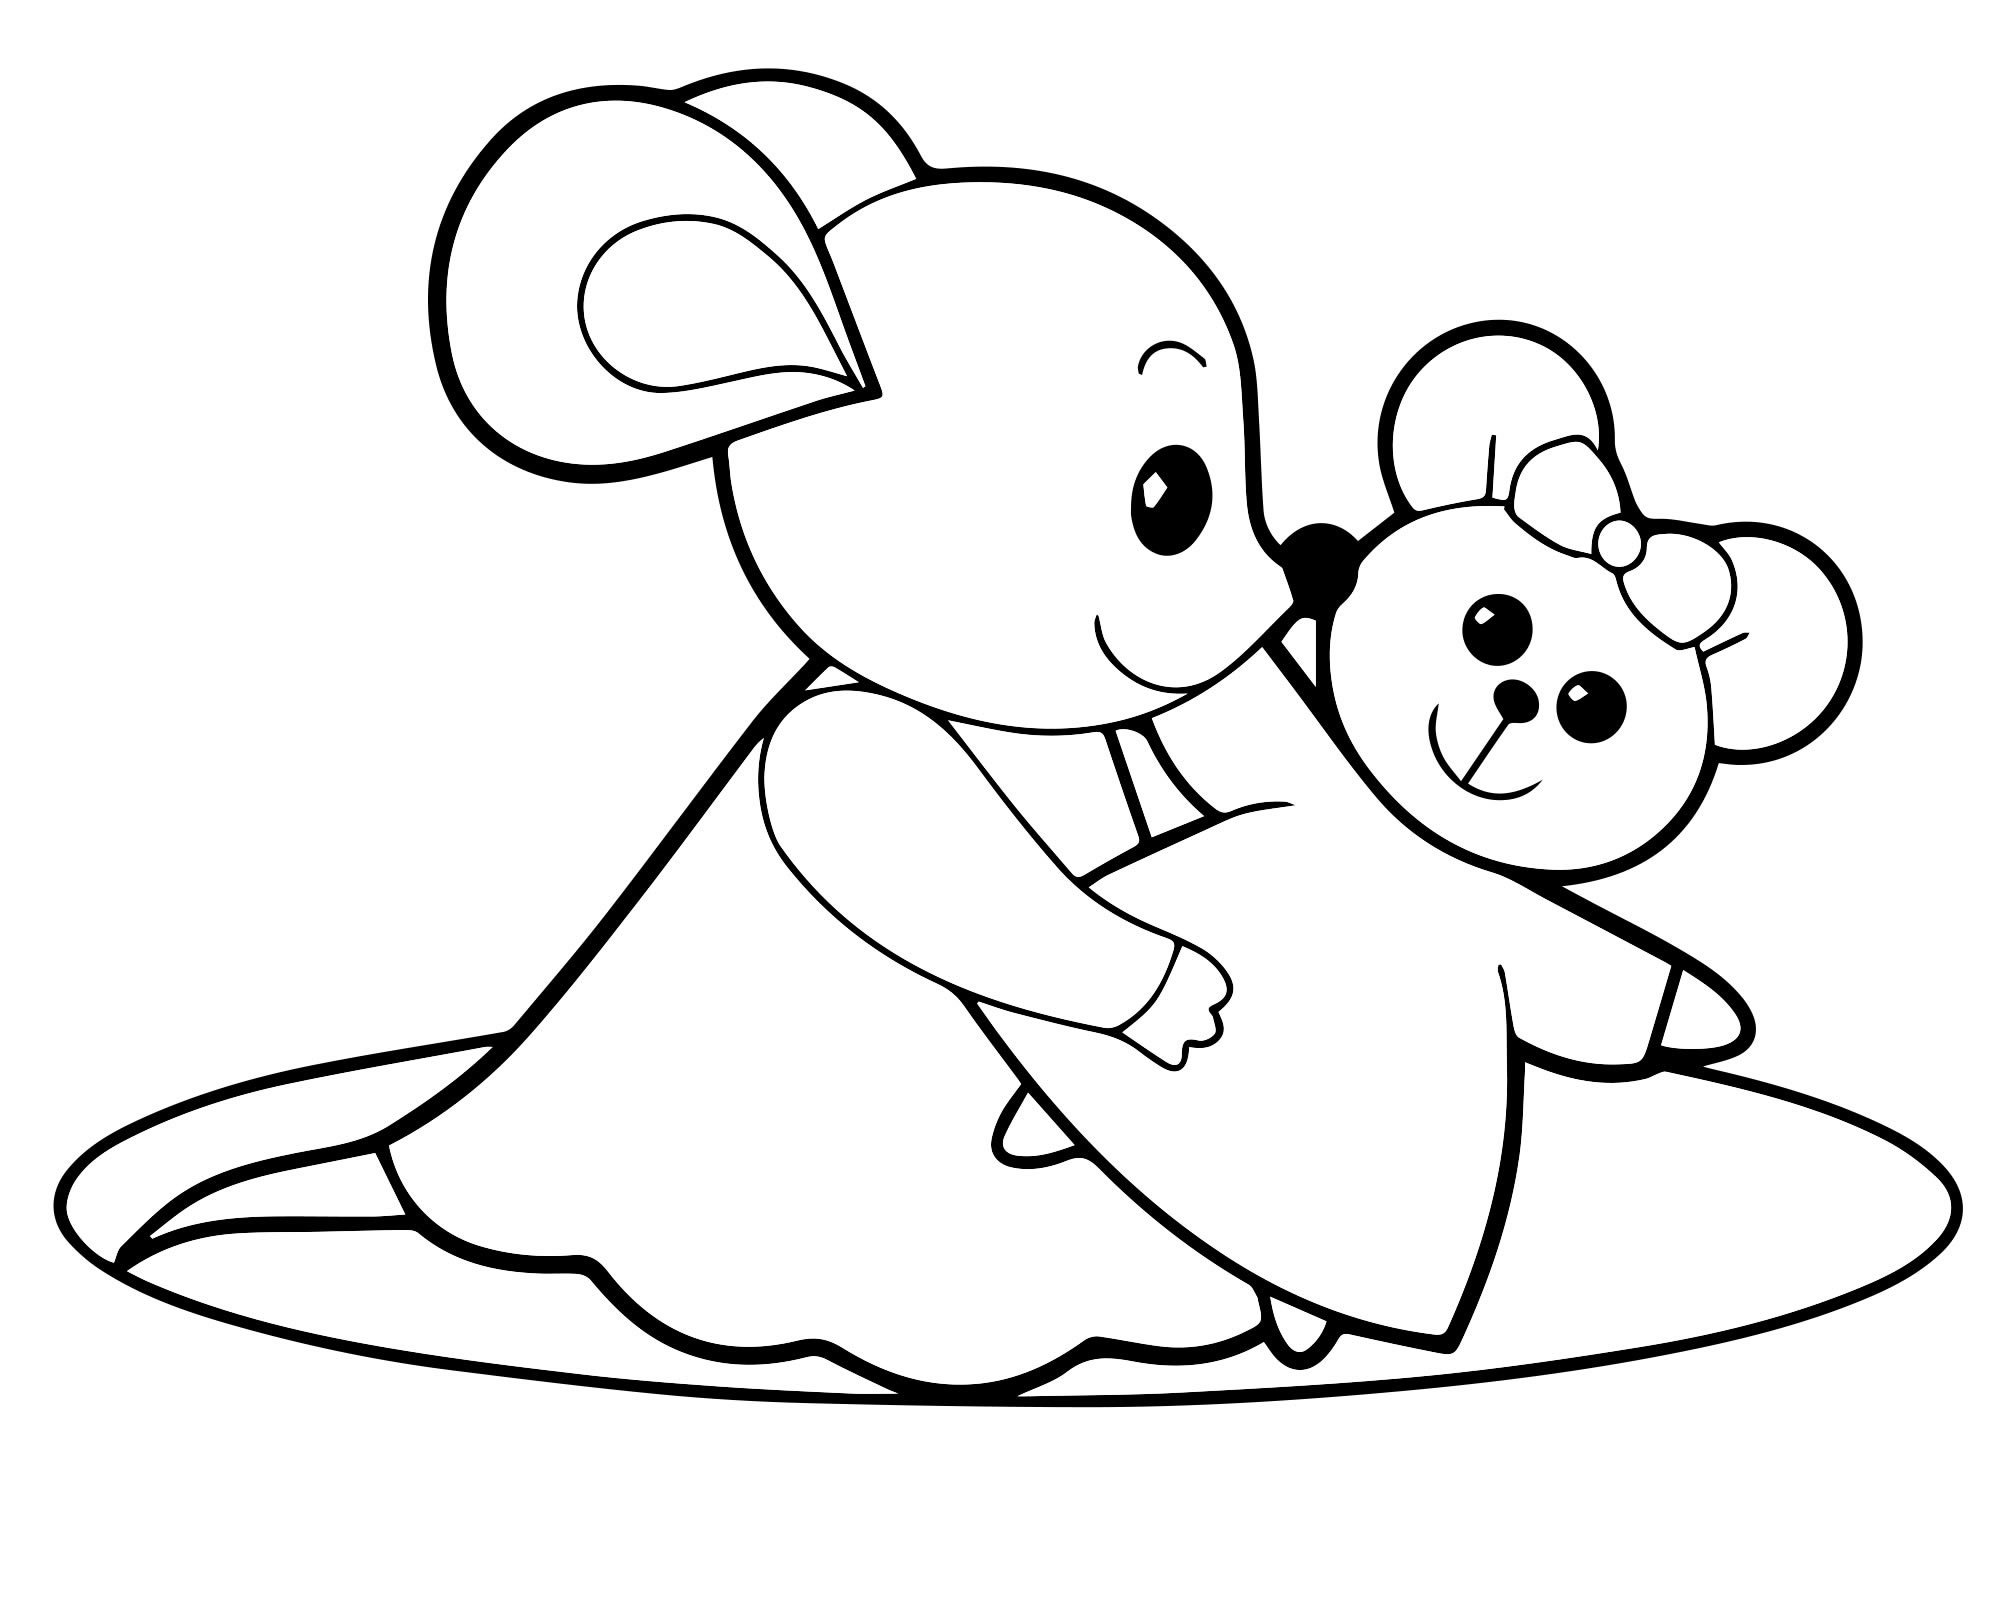 Раскраска мышь распечатать. Раскраска мышка. Раскраска мышонок. Раскраски для малышей. Мышка раскраска для детей.